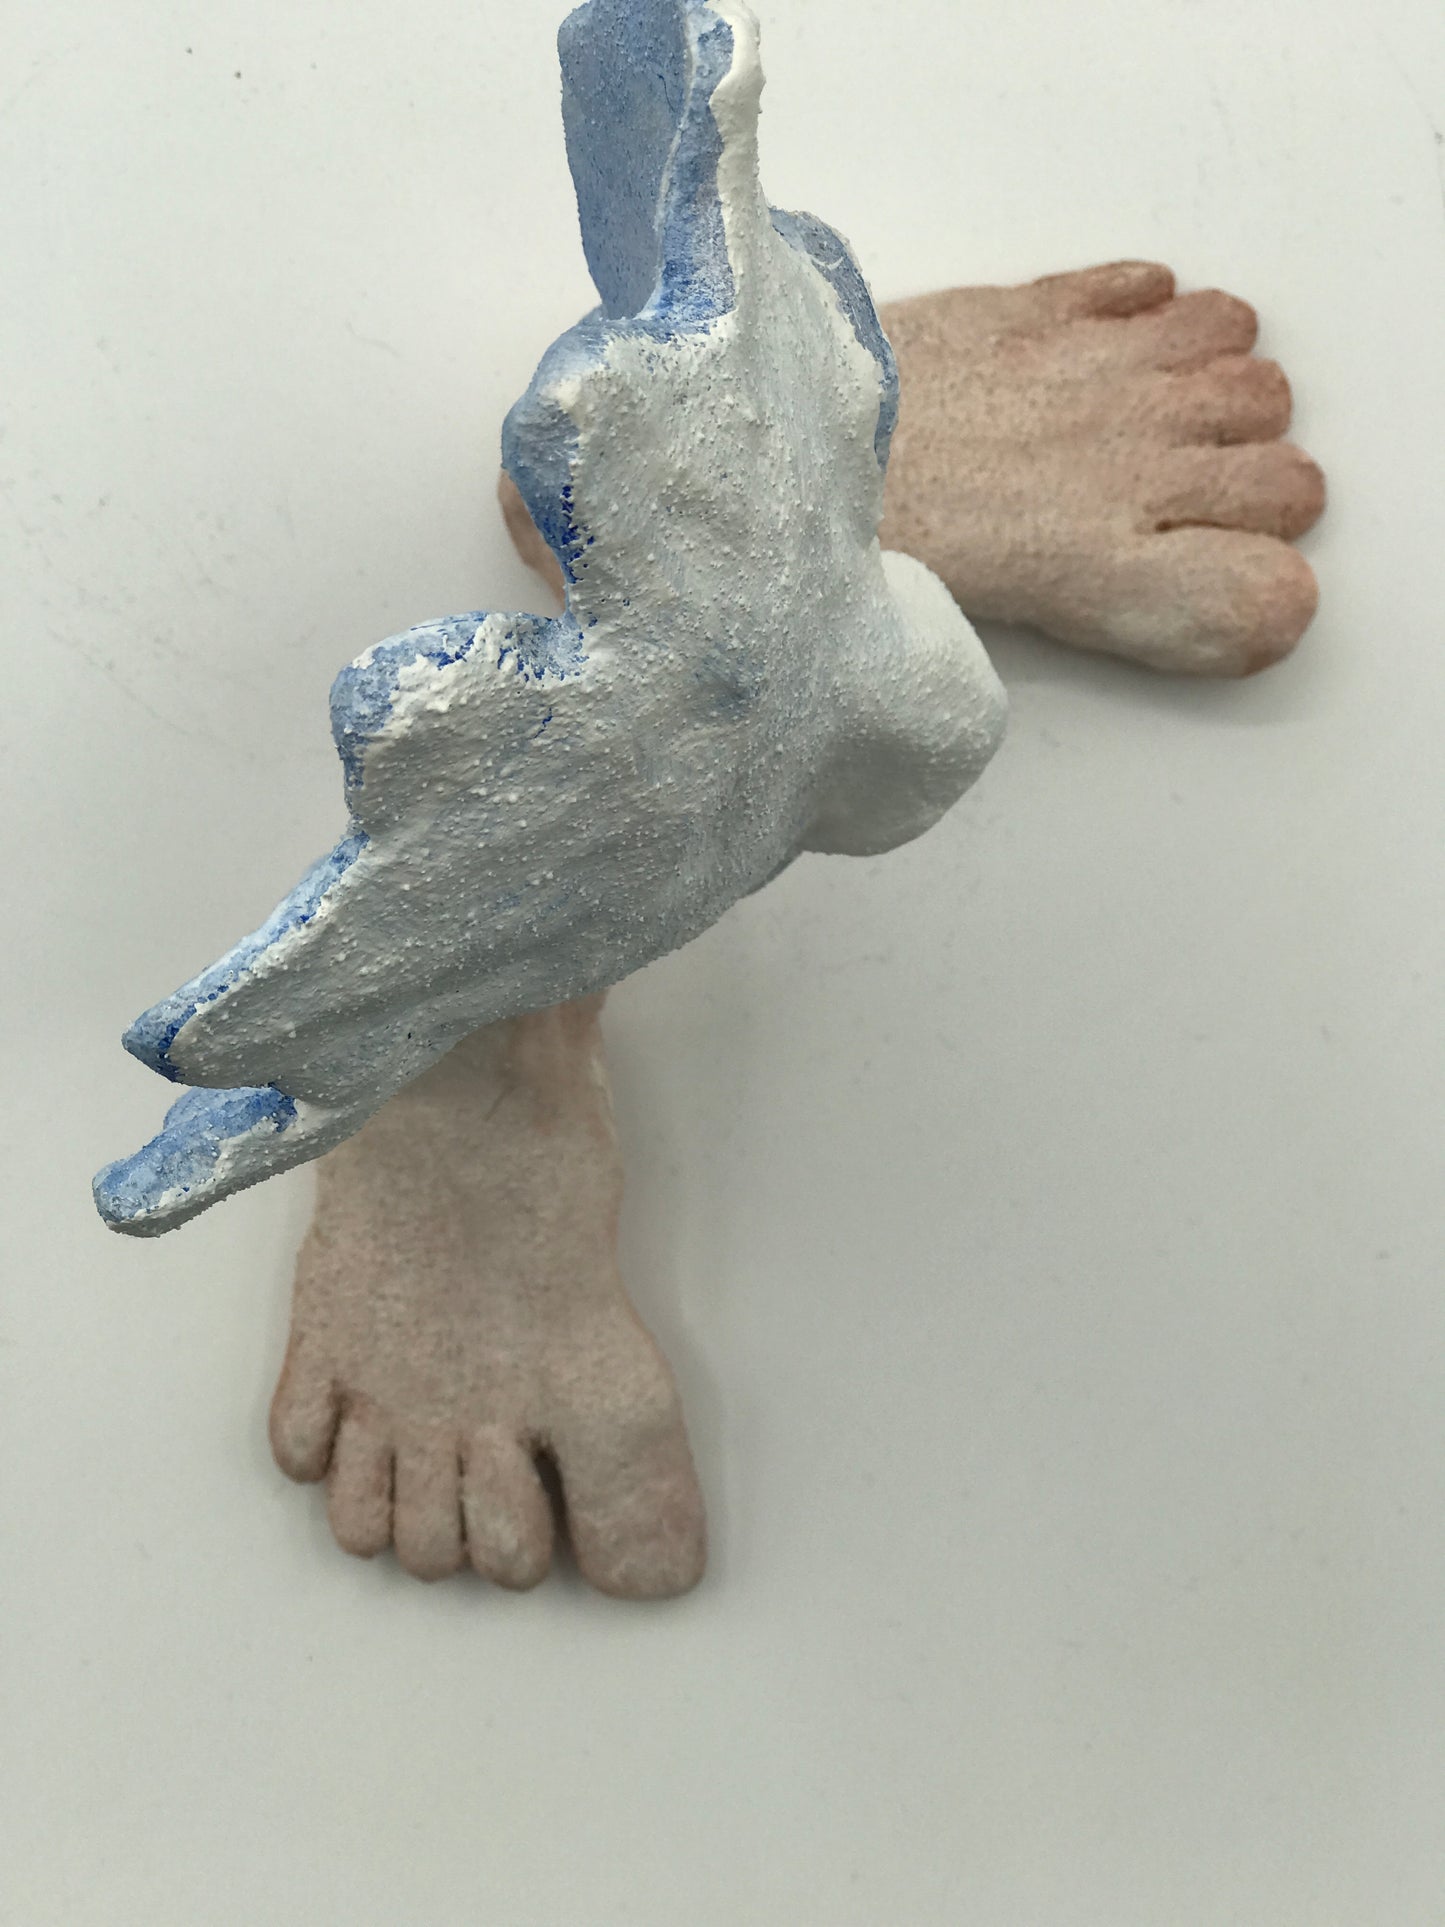 Slightly Suspicious - Clay Figure Sculpture